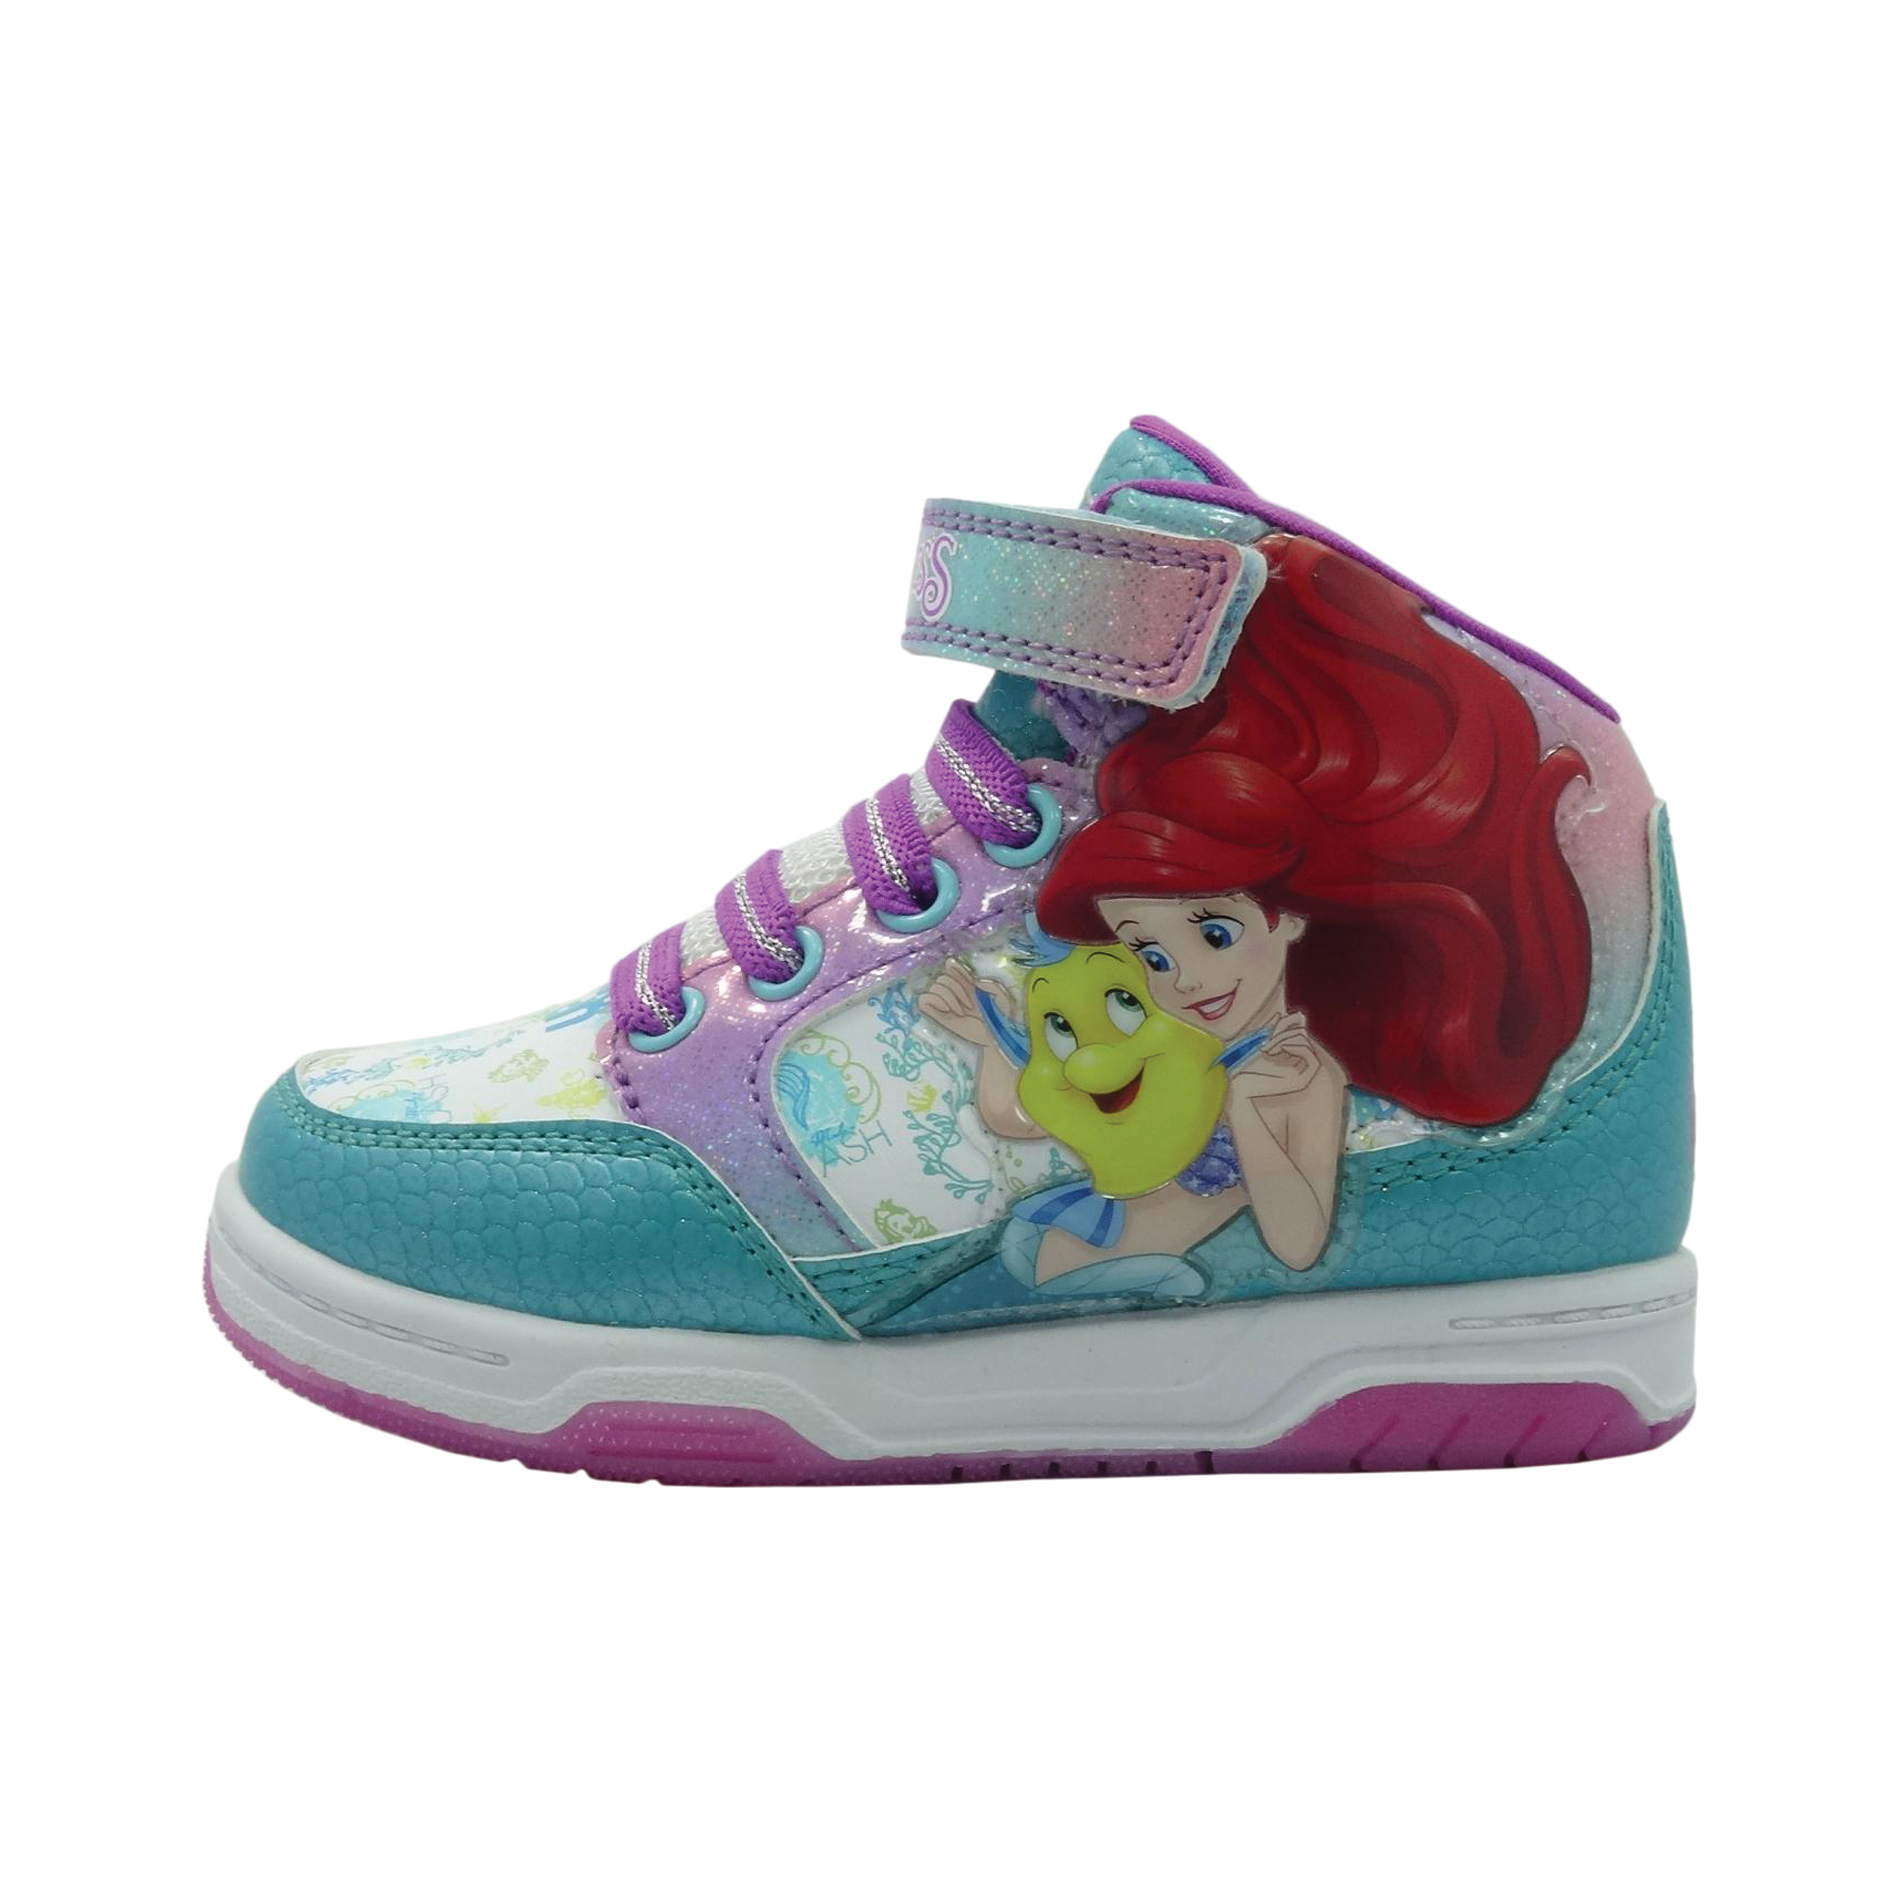 Disney Baby Shoes | Kmart.com